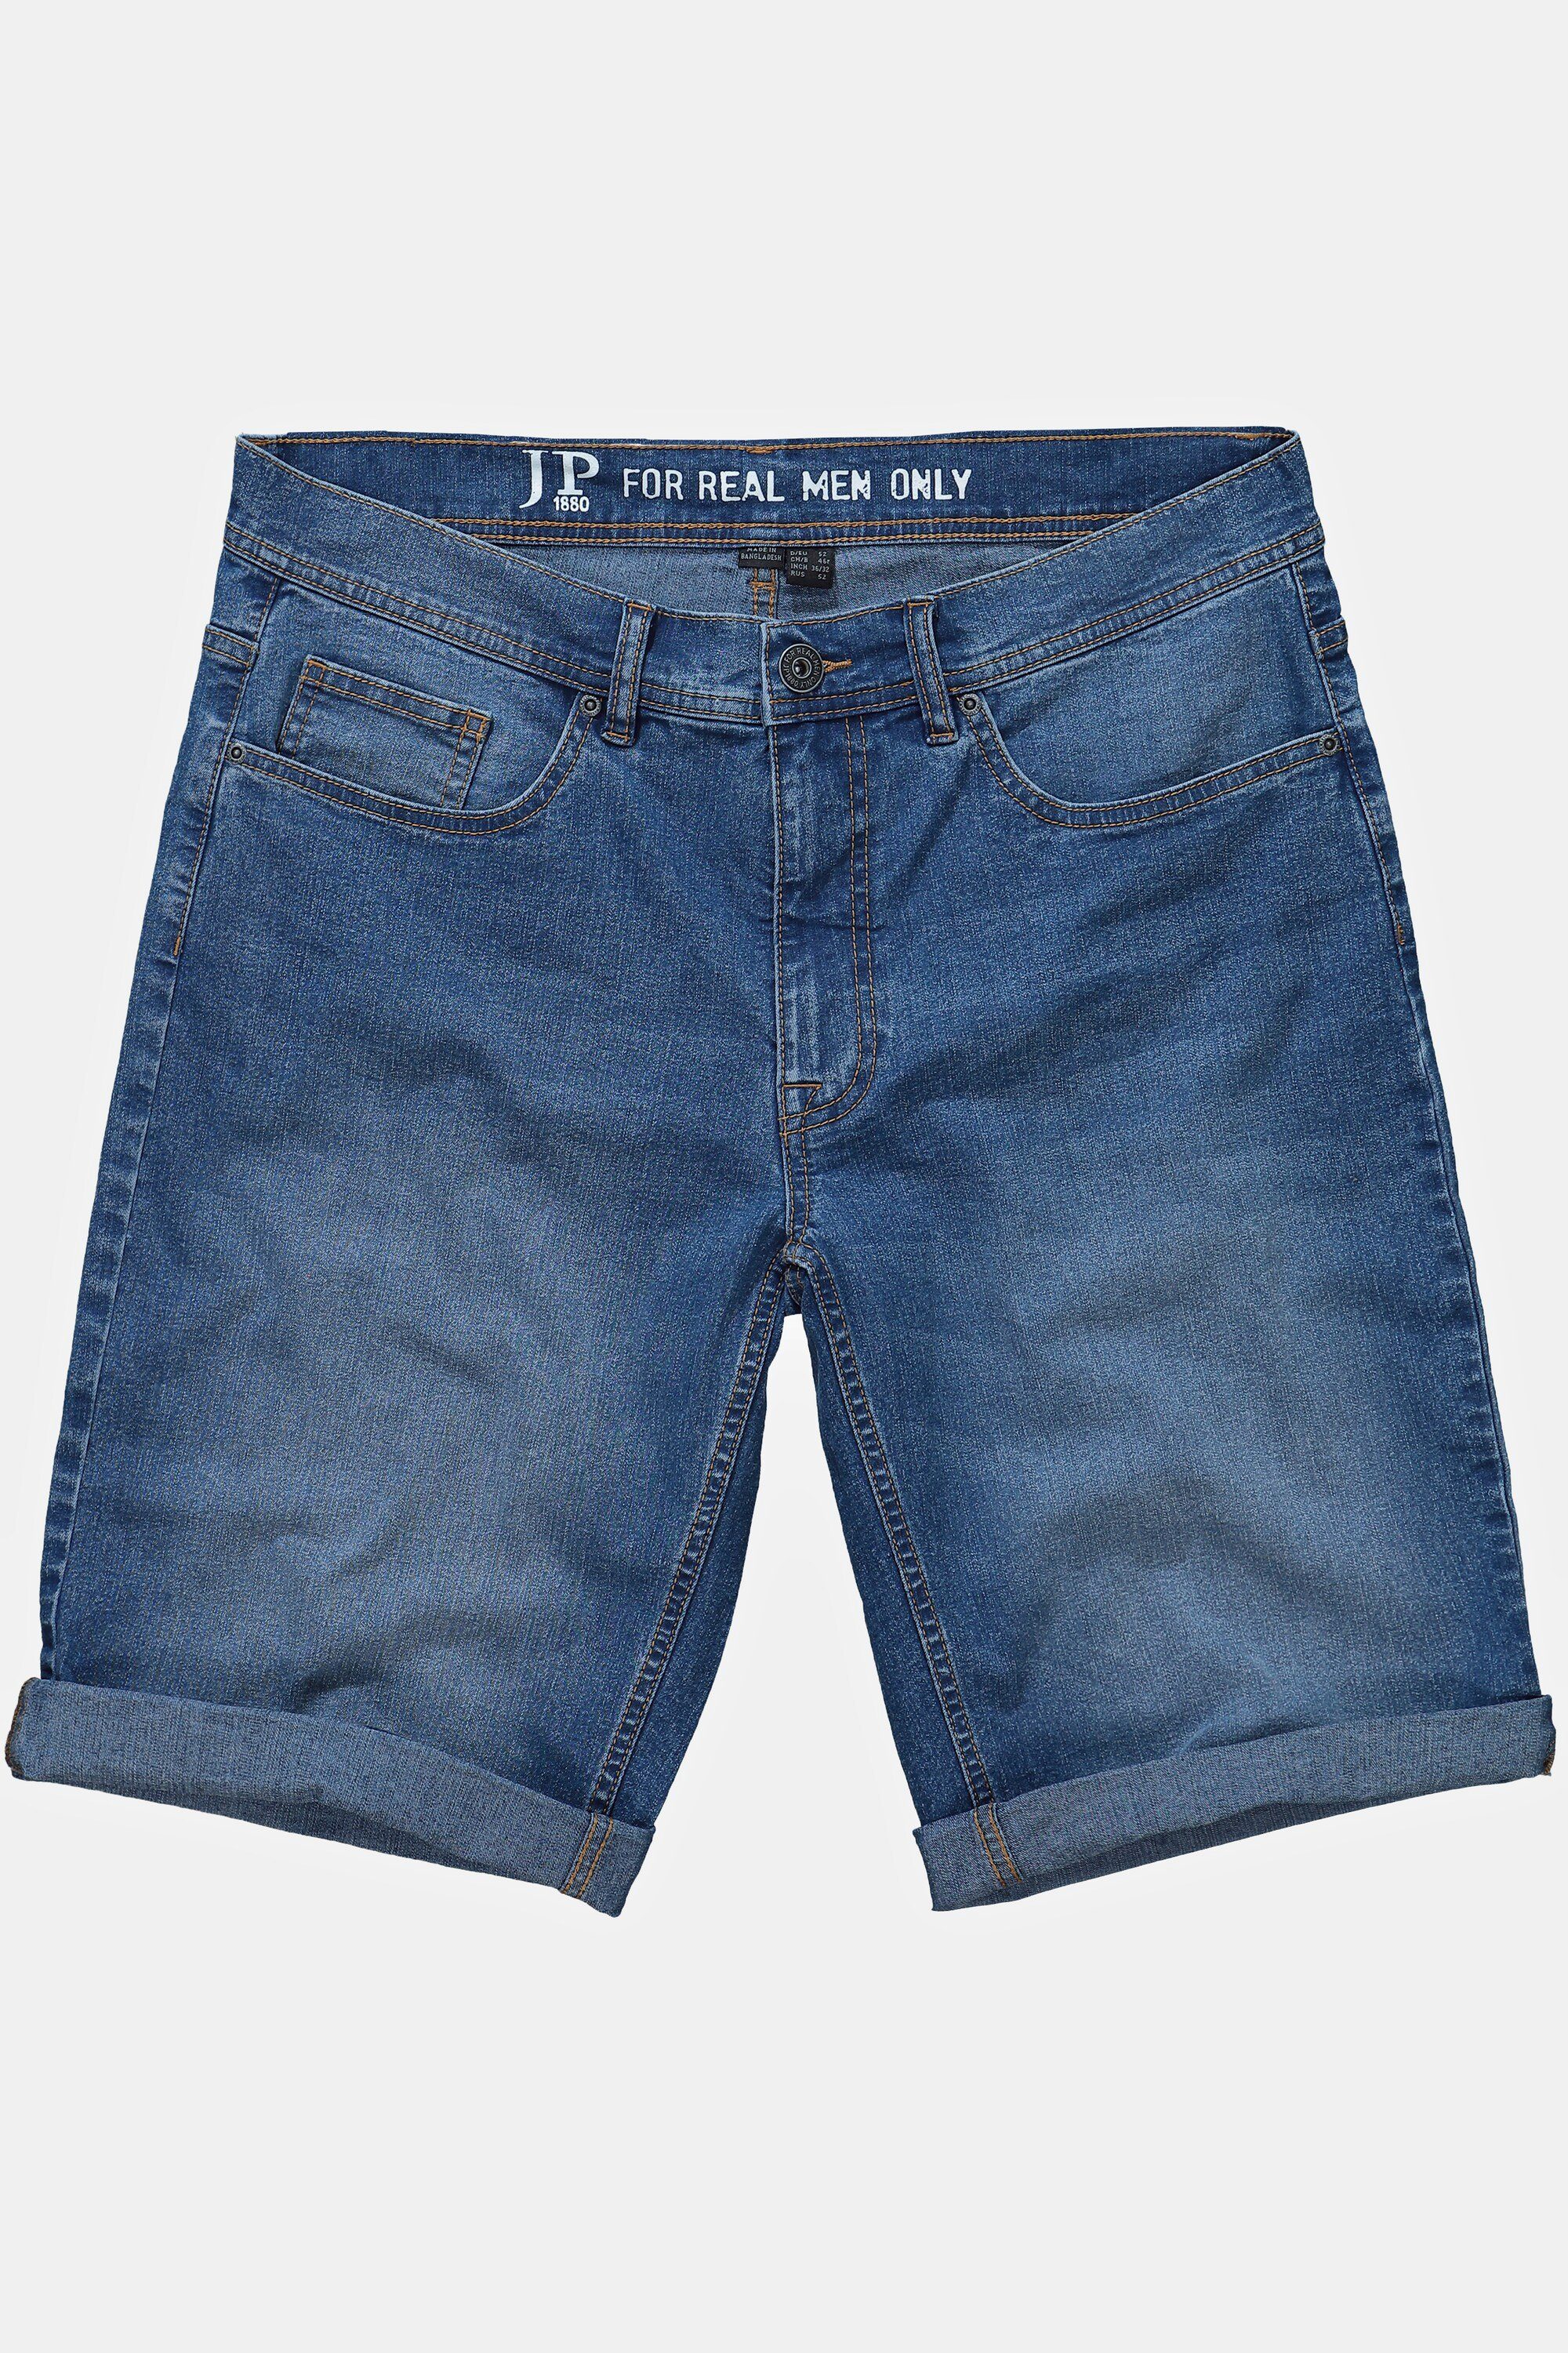 JP1880 Jeansbermudas blue Denim Stretch denim Regular Fit 5-Pocket Bermuda